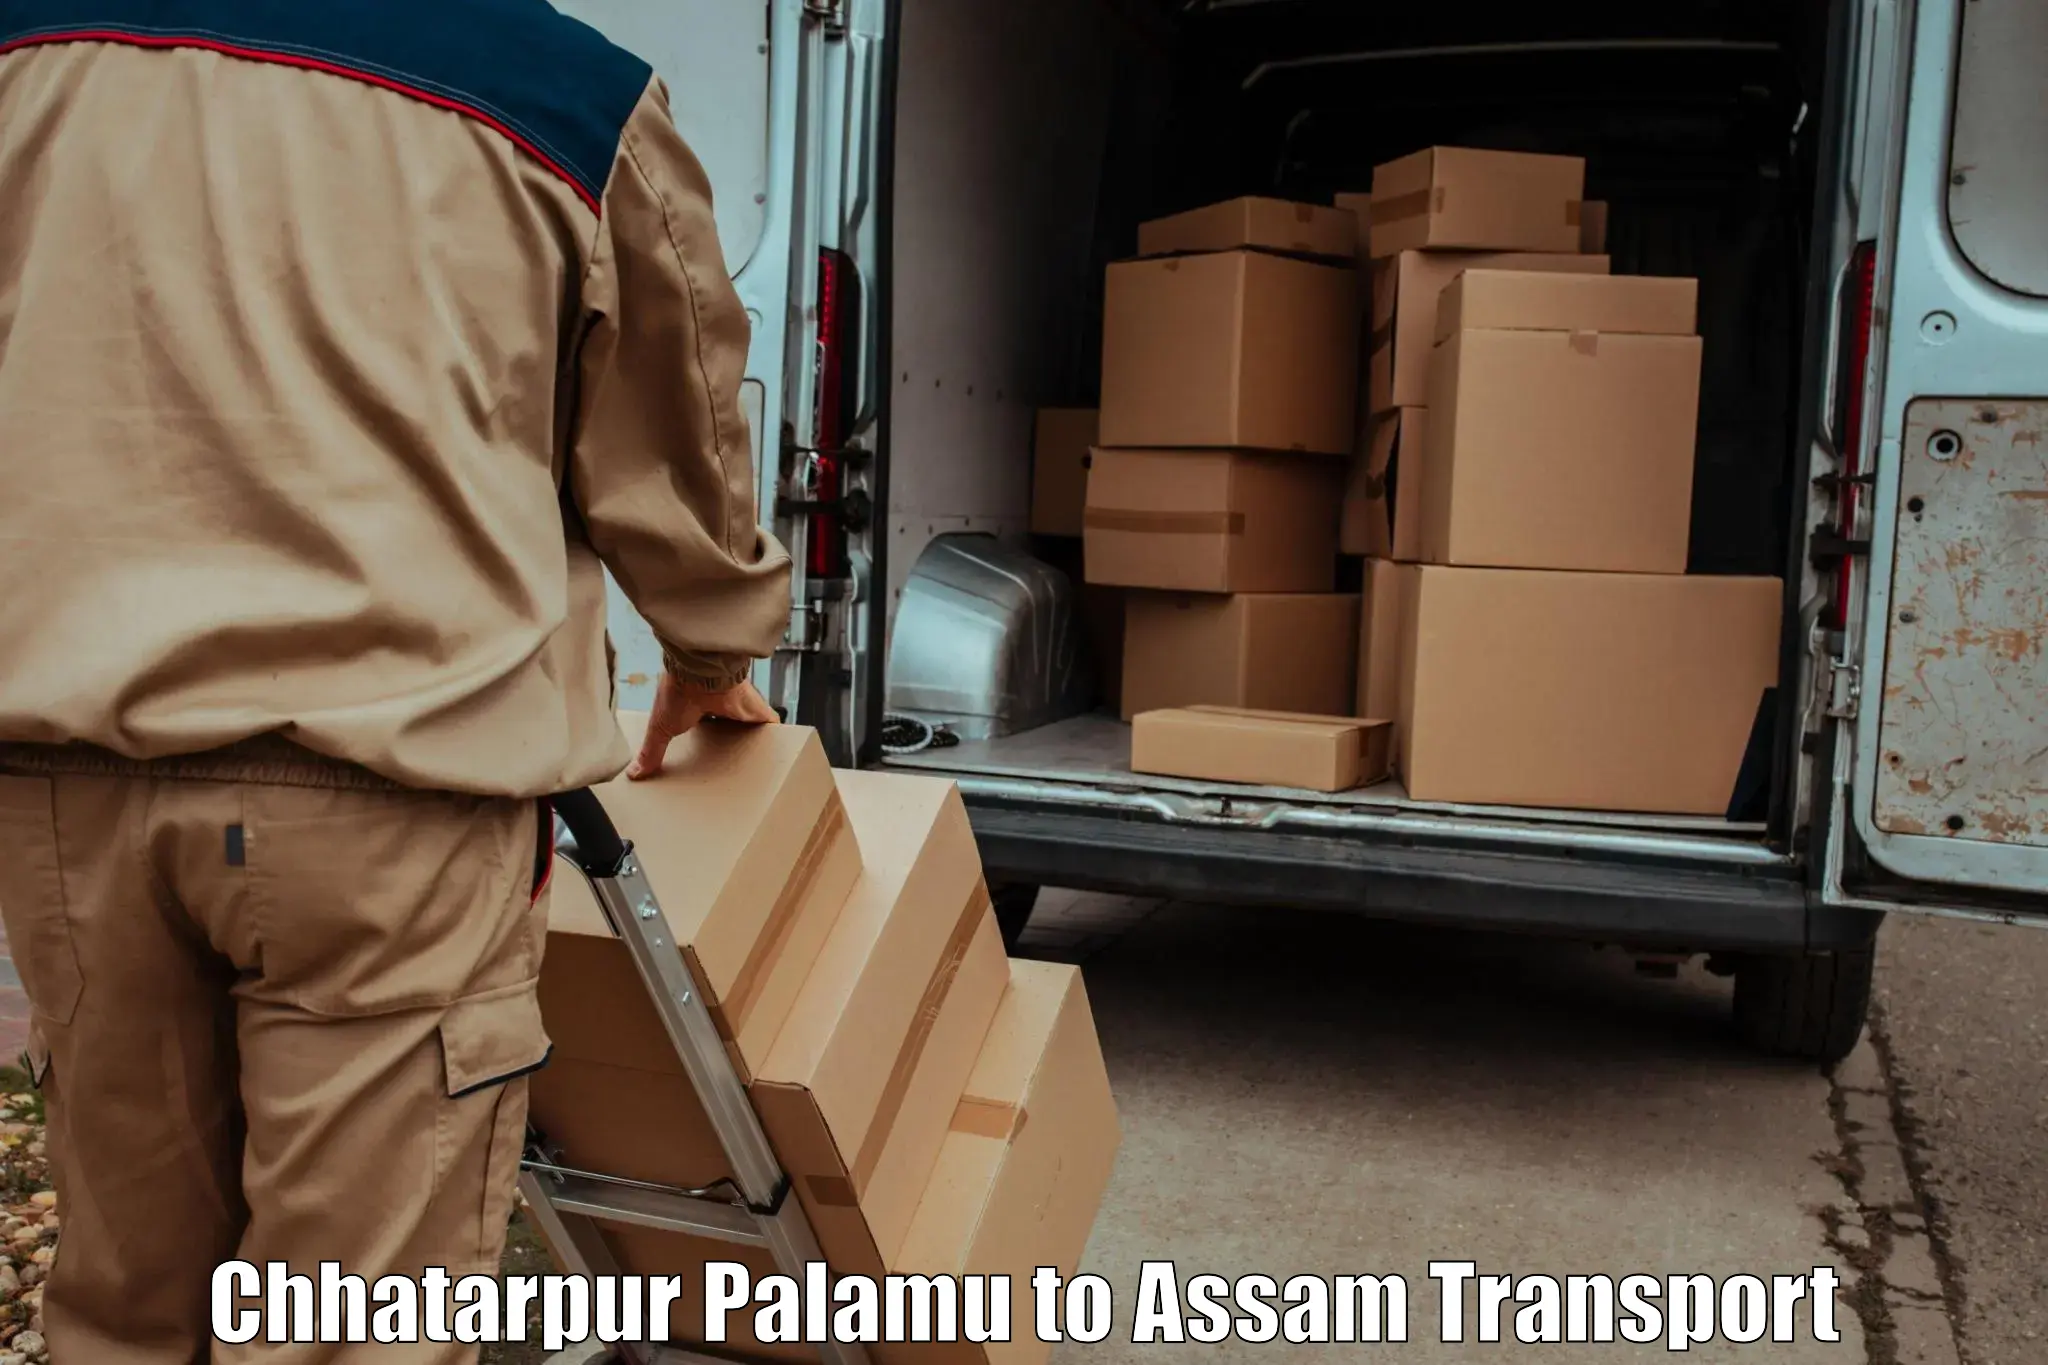 Luggage transport services in Chhatarpur Palamu to Rupai Siding